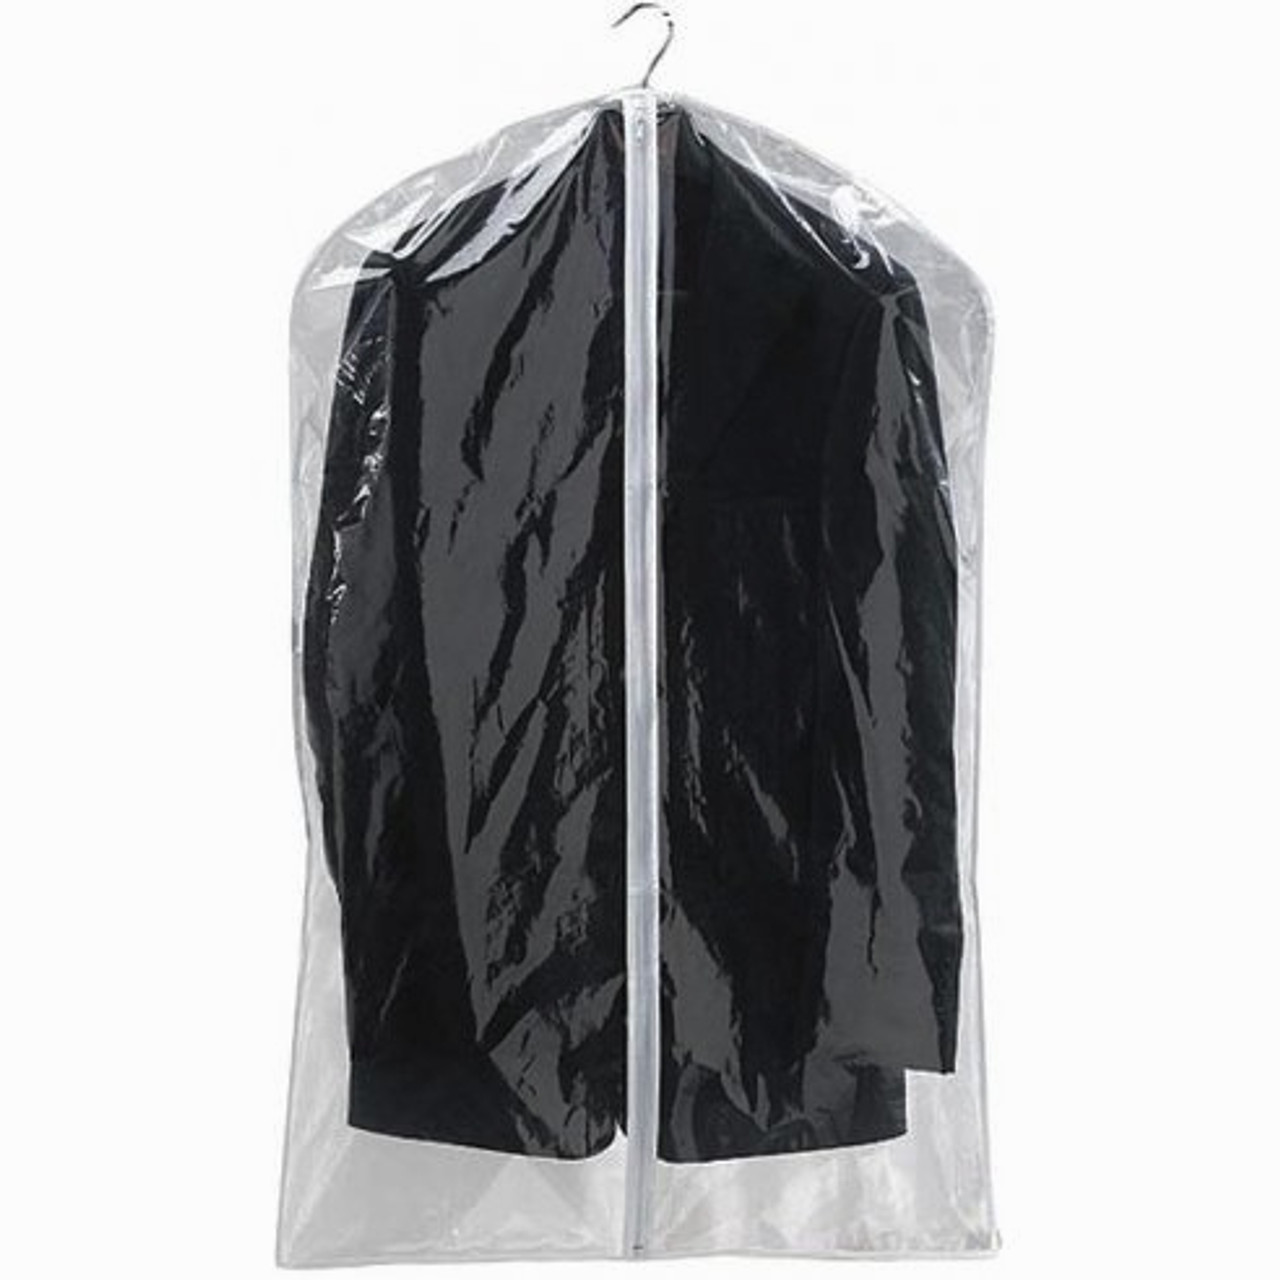 Clear Vinyl Garment Bag w/ Zipper